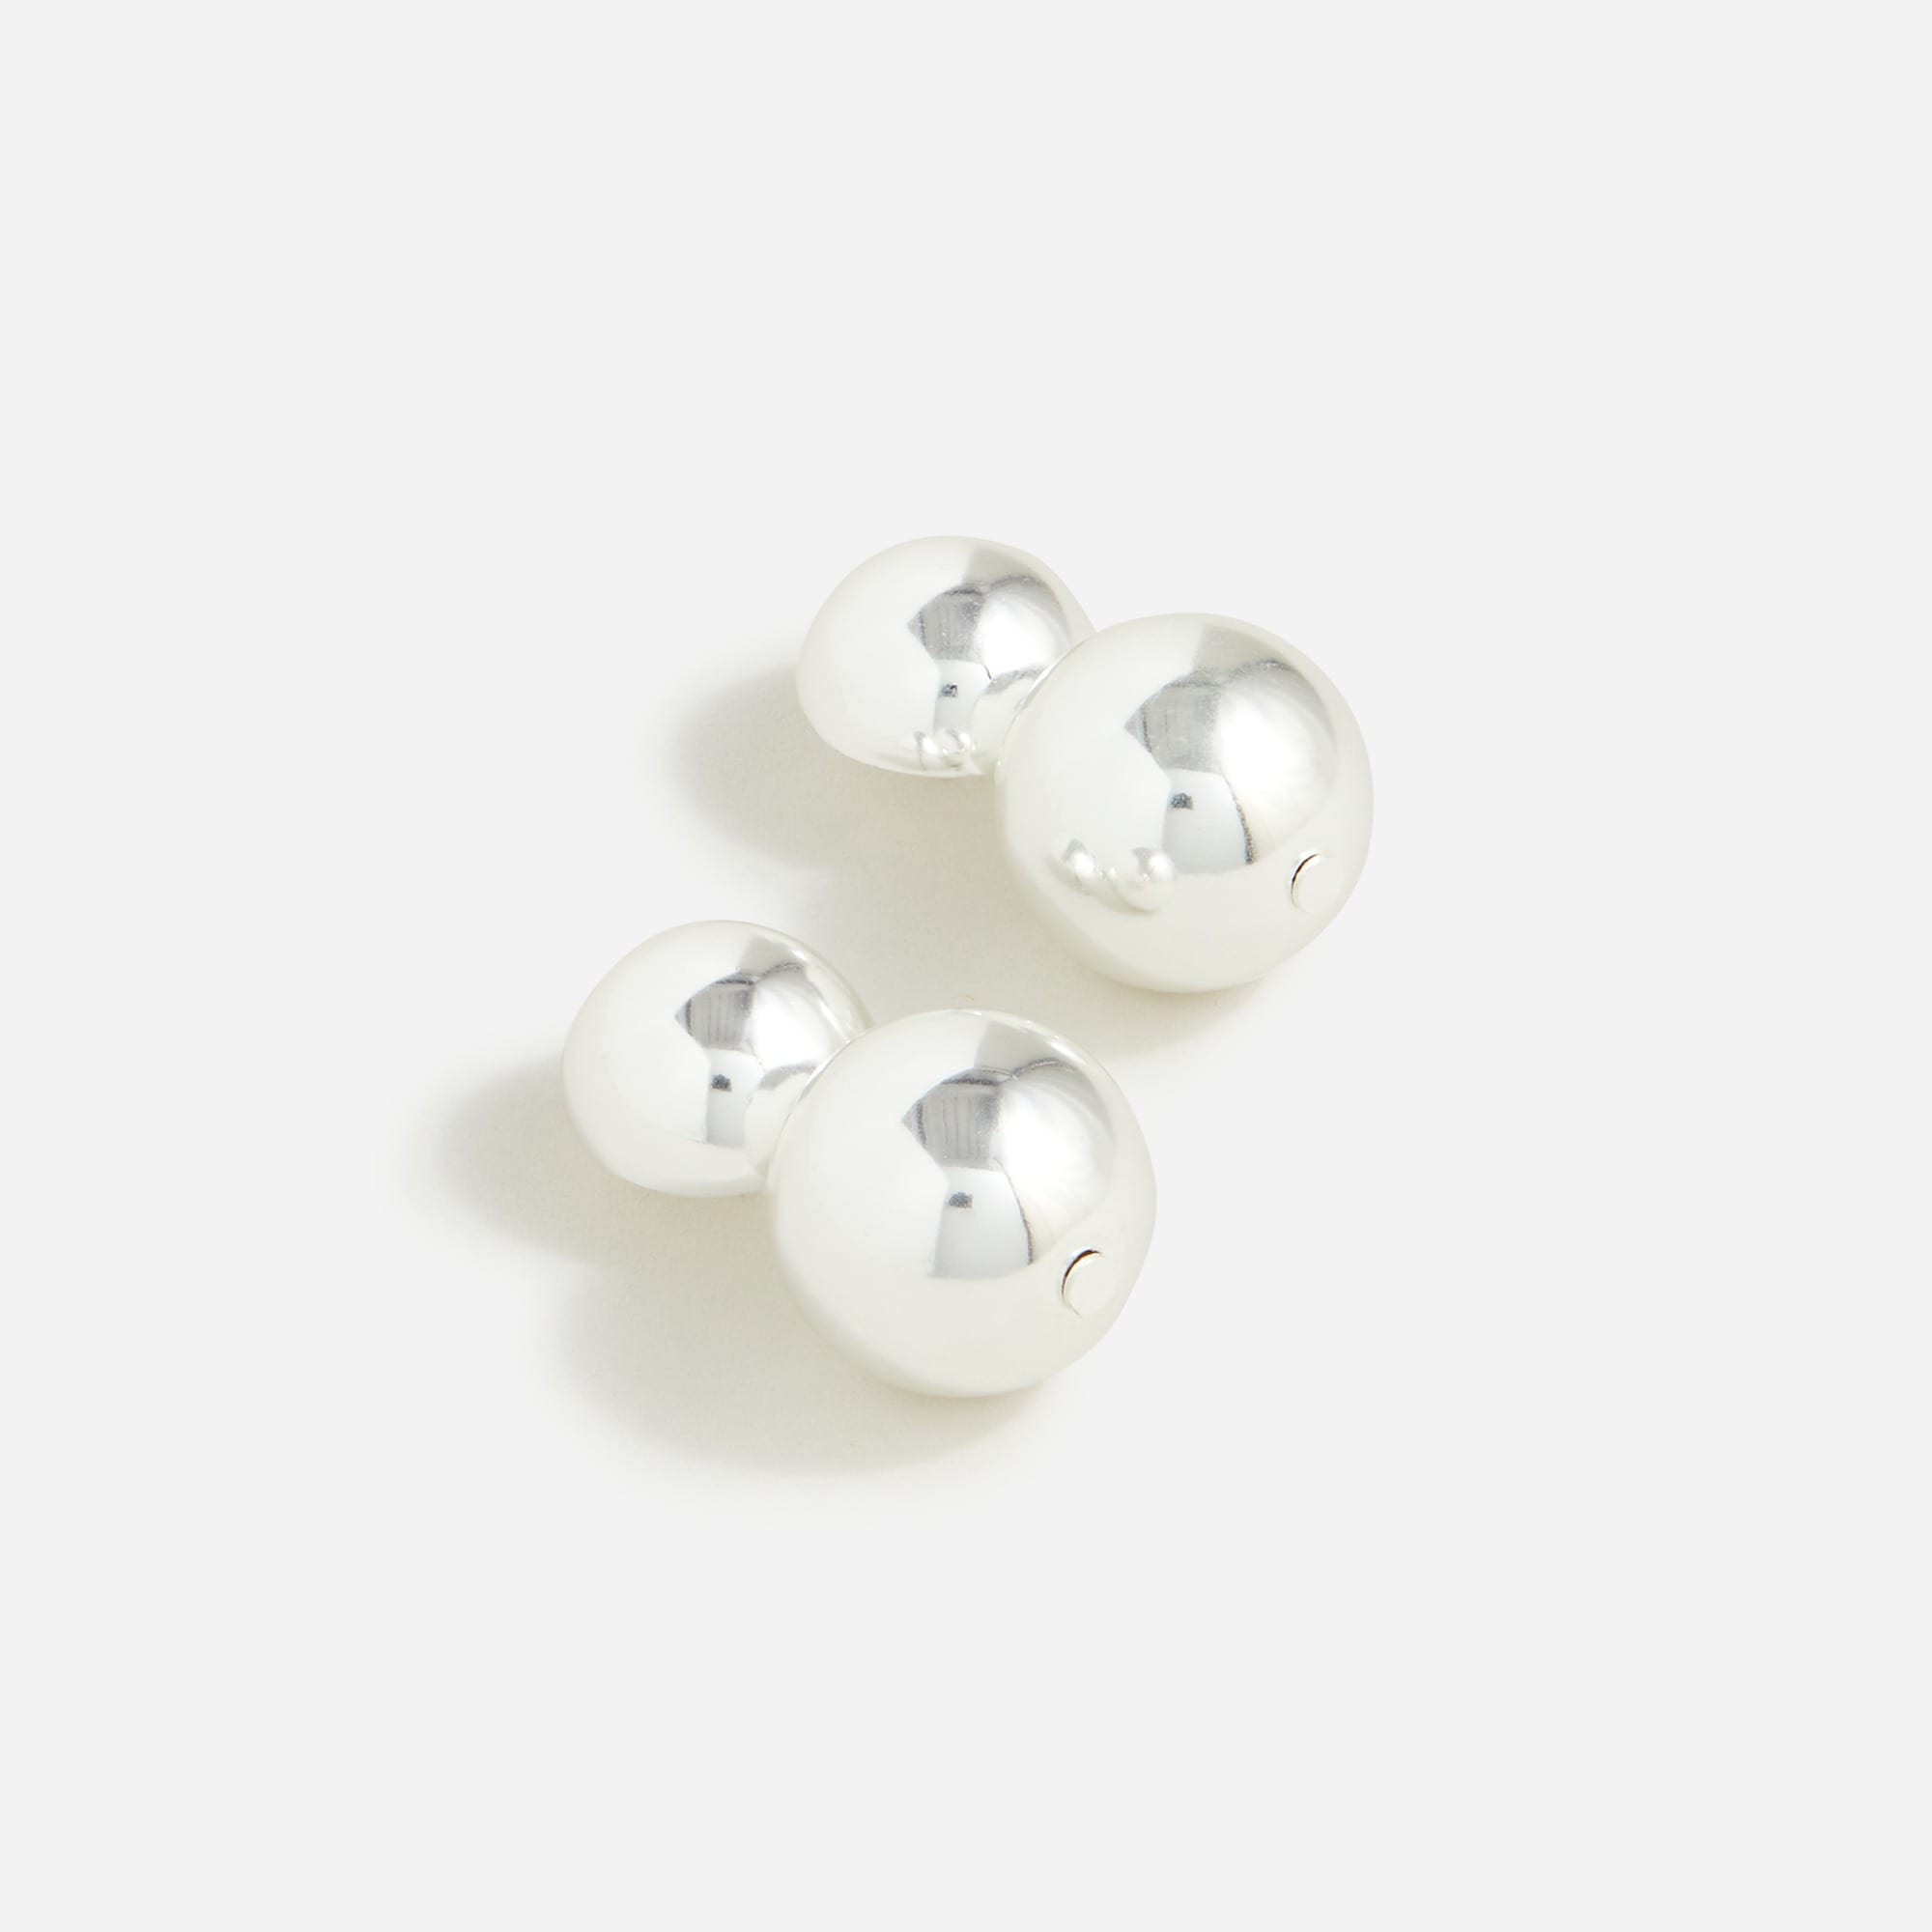  Metallic ball earrings